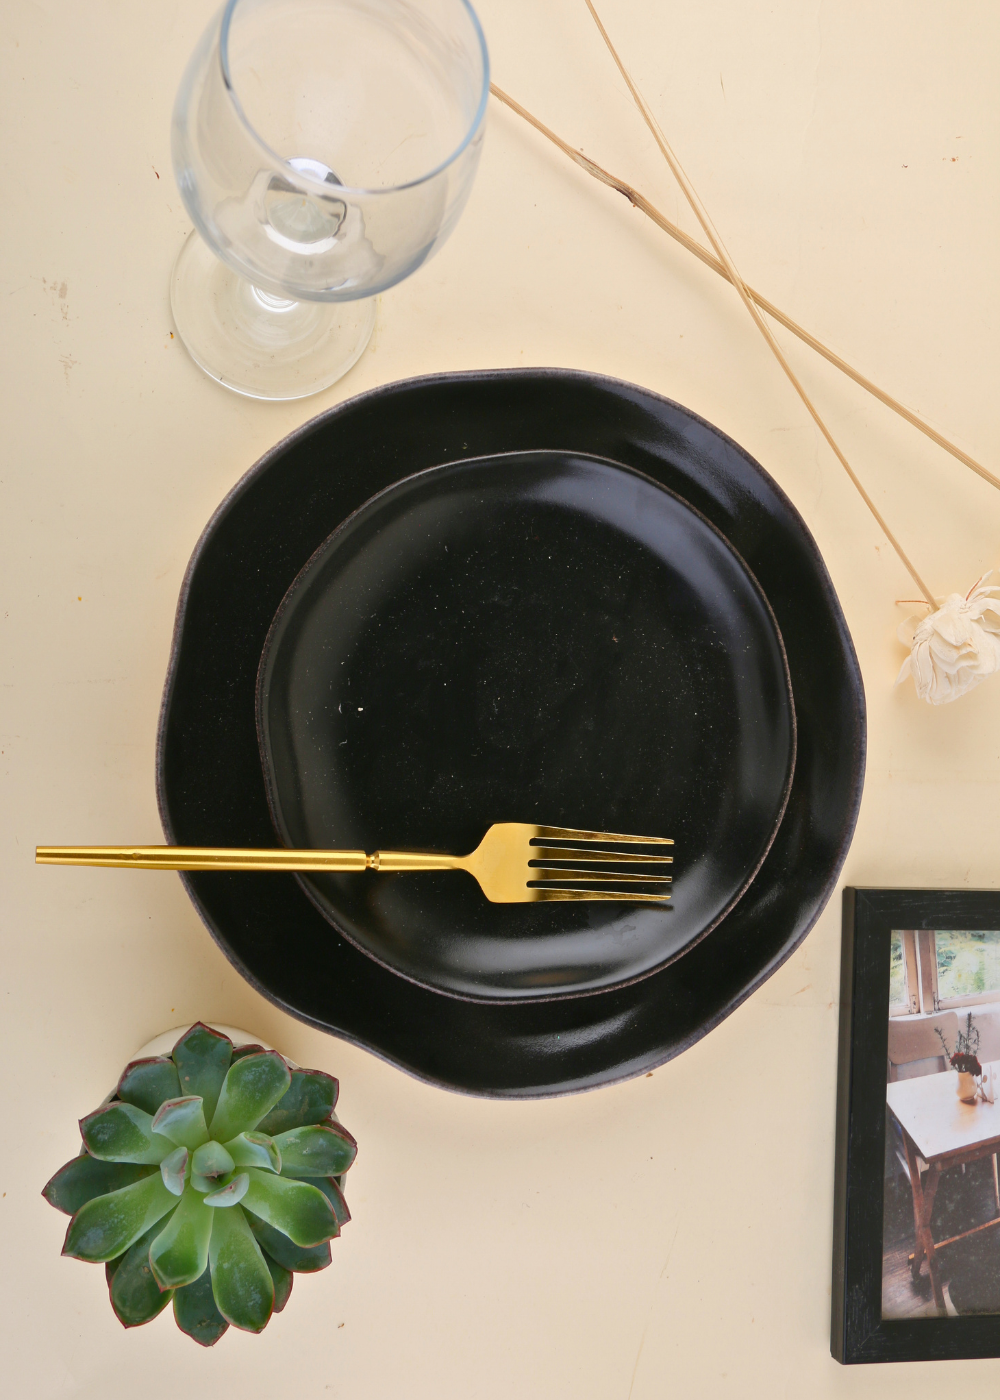 Golden fork on black plate